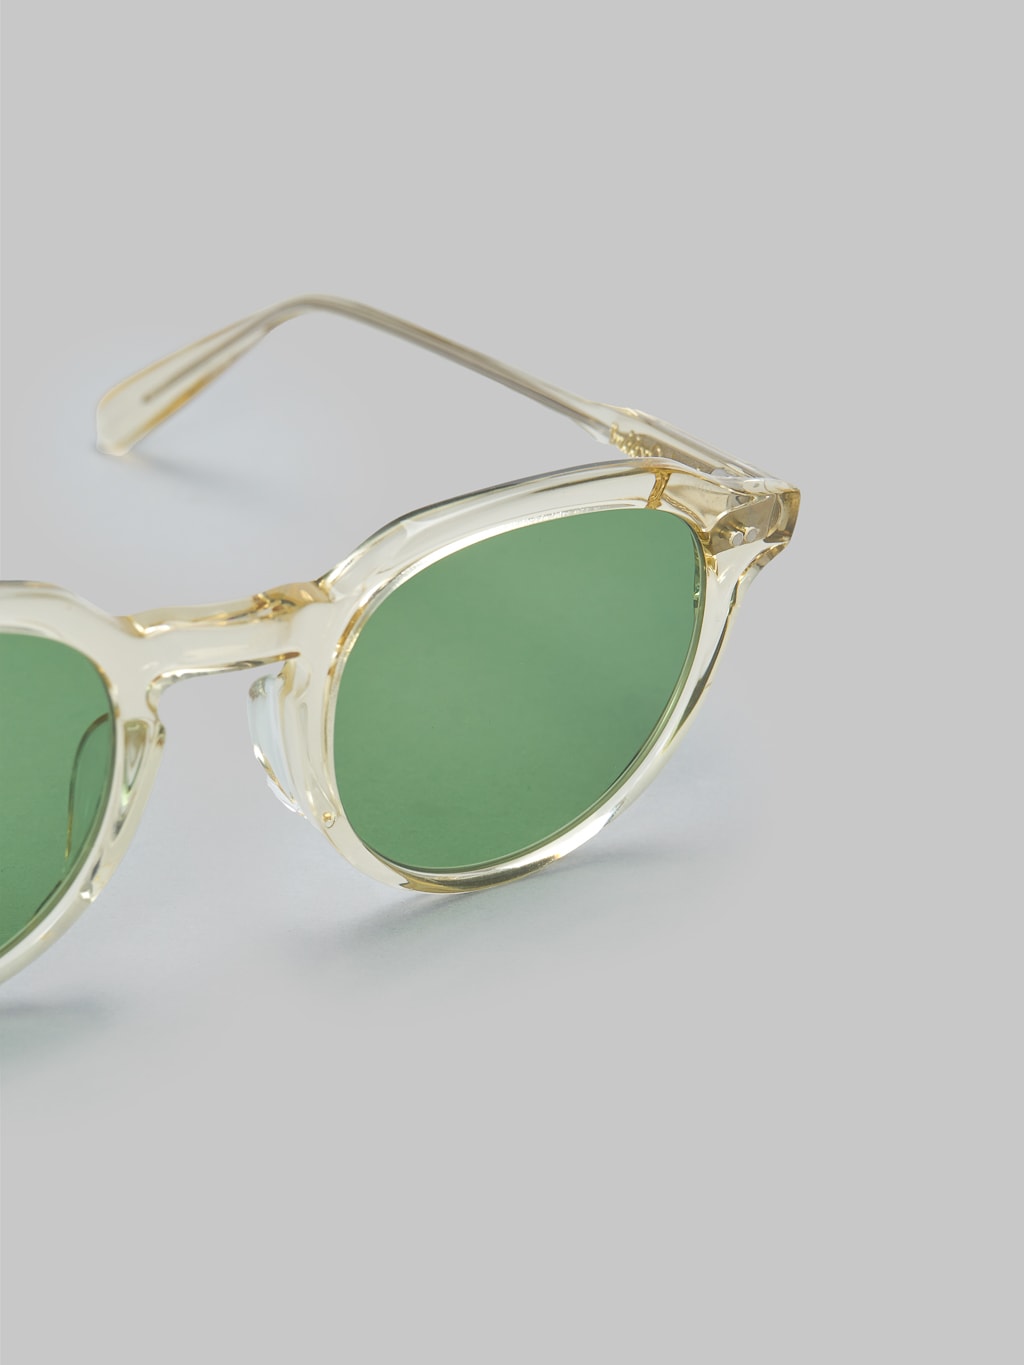 Buddy Optical Sorbonne Glasses Ecru Brescia green lenses